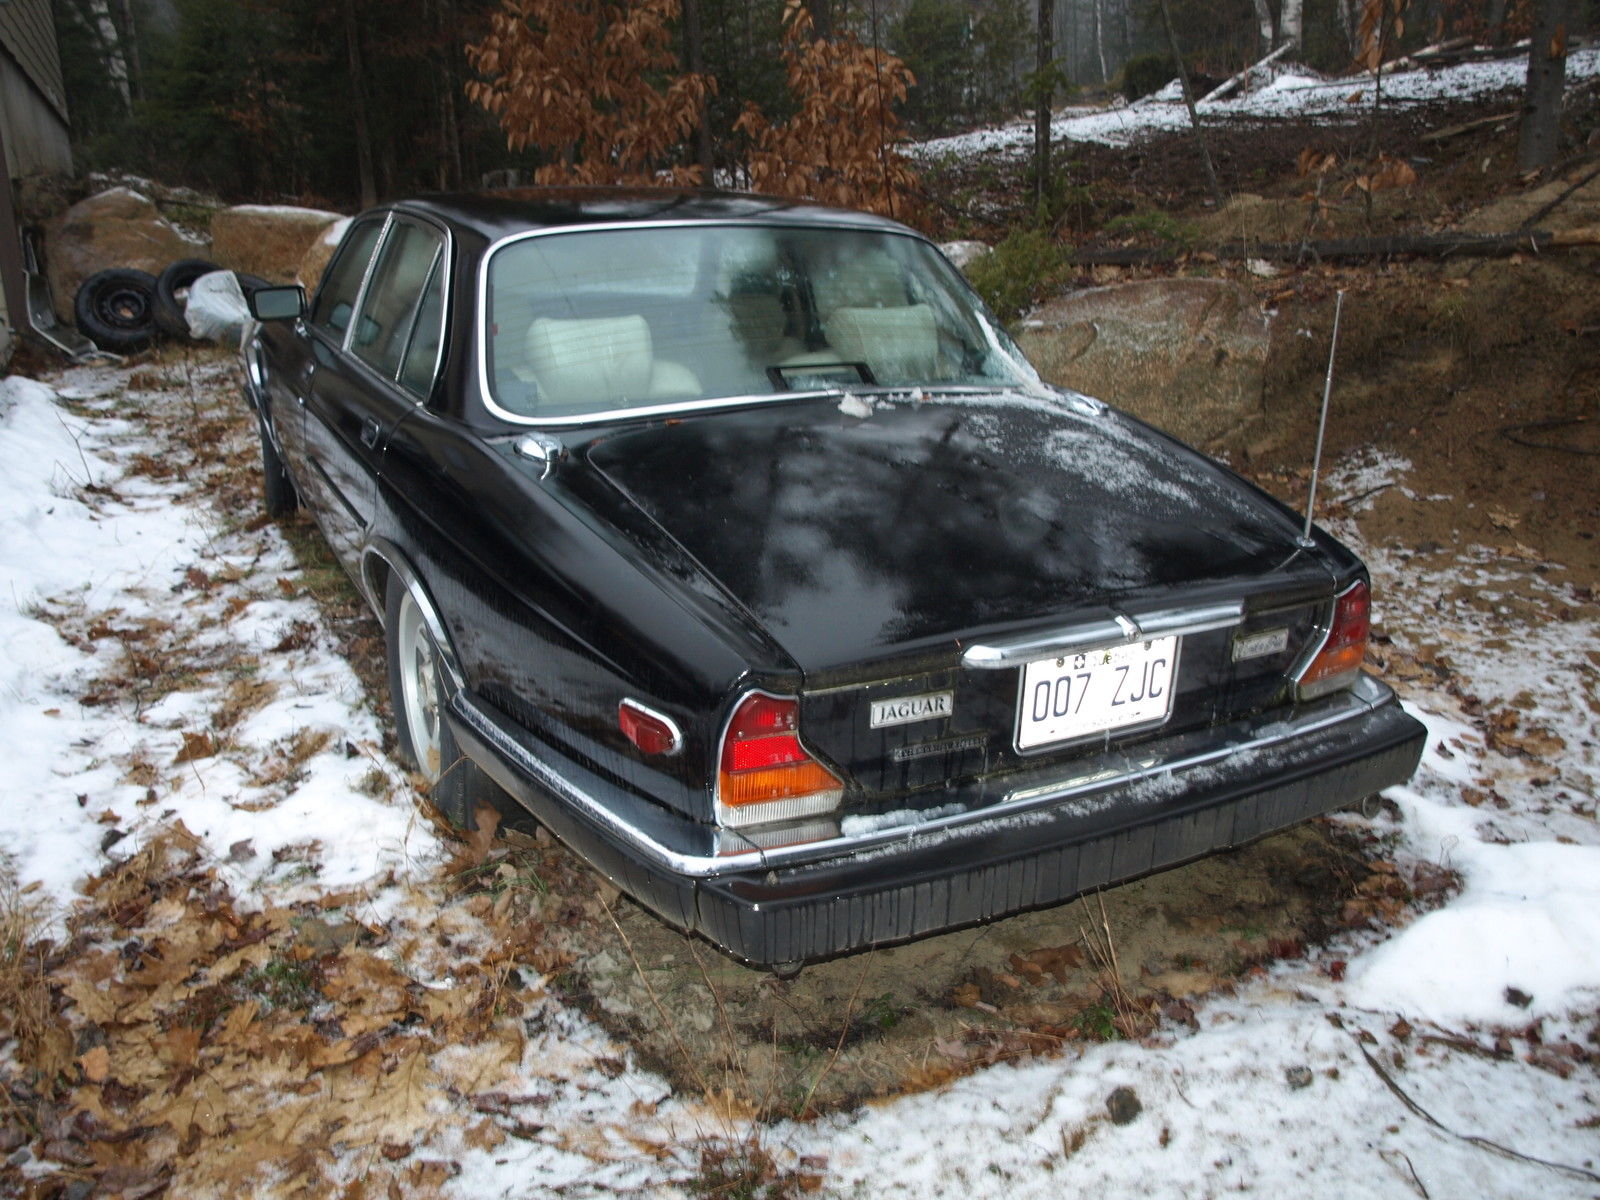 1987 Jaguar XJ12, for Restoration or parts - Classic ...